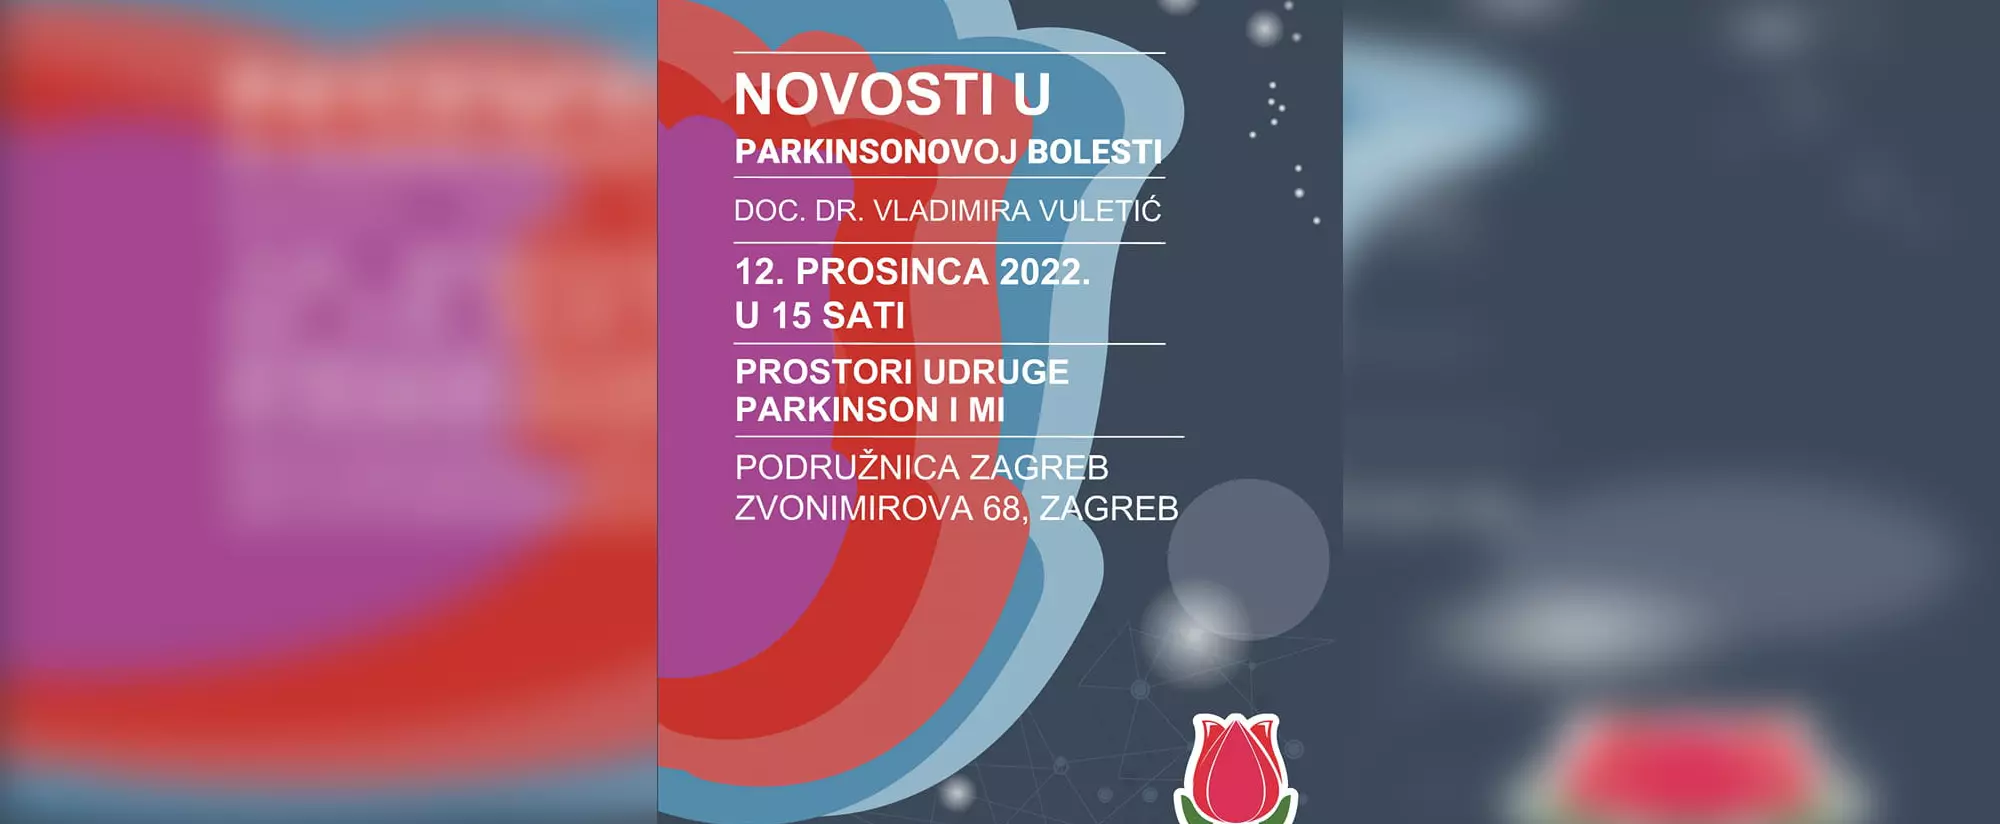 Novosti u Parkinsonovoj bolesti - Zagreb 12.12